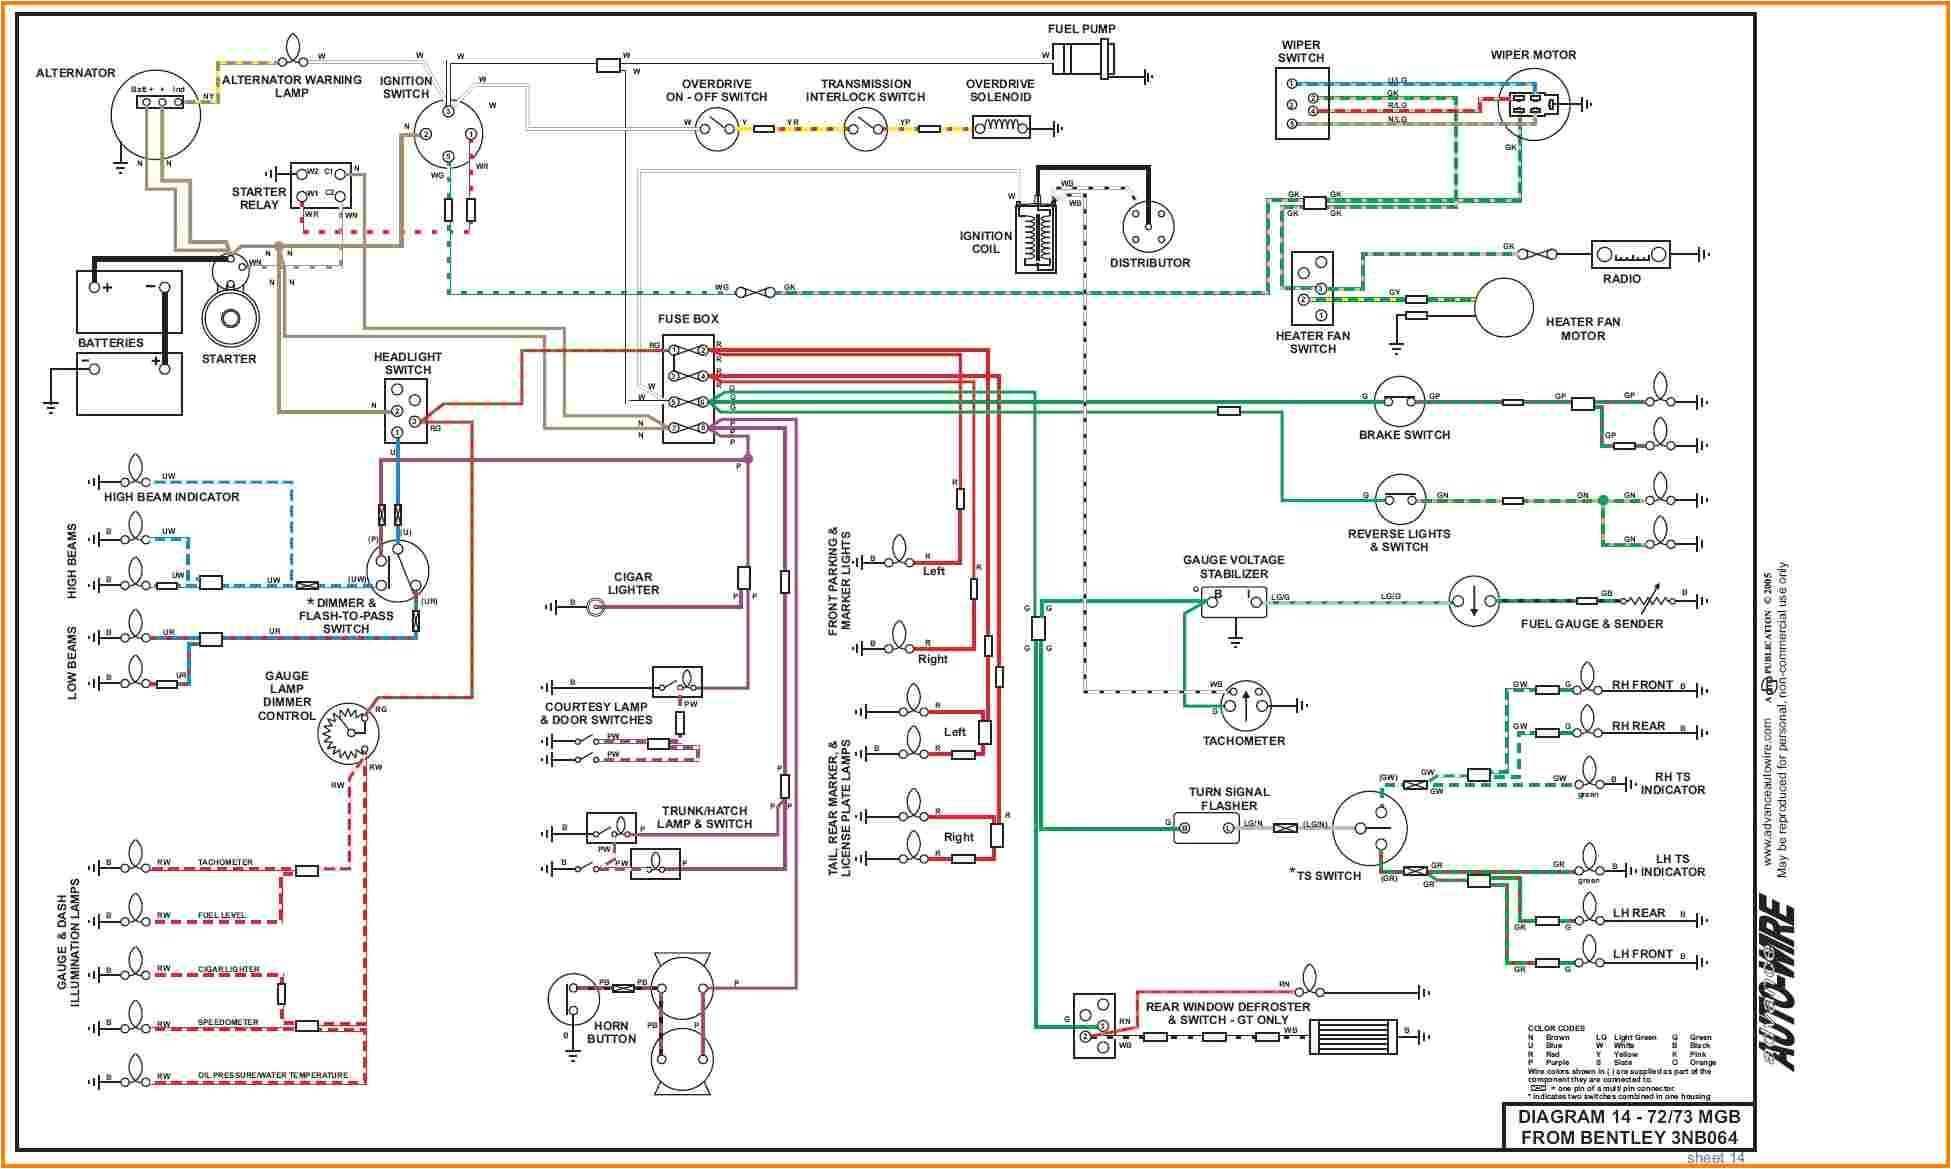 1976 mgb engine diagram wiring diagrams ments 1976 mgb engine diagram